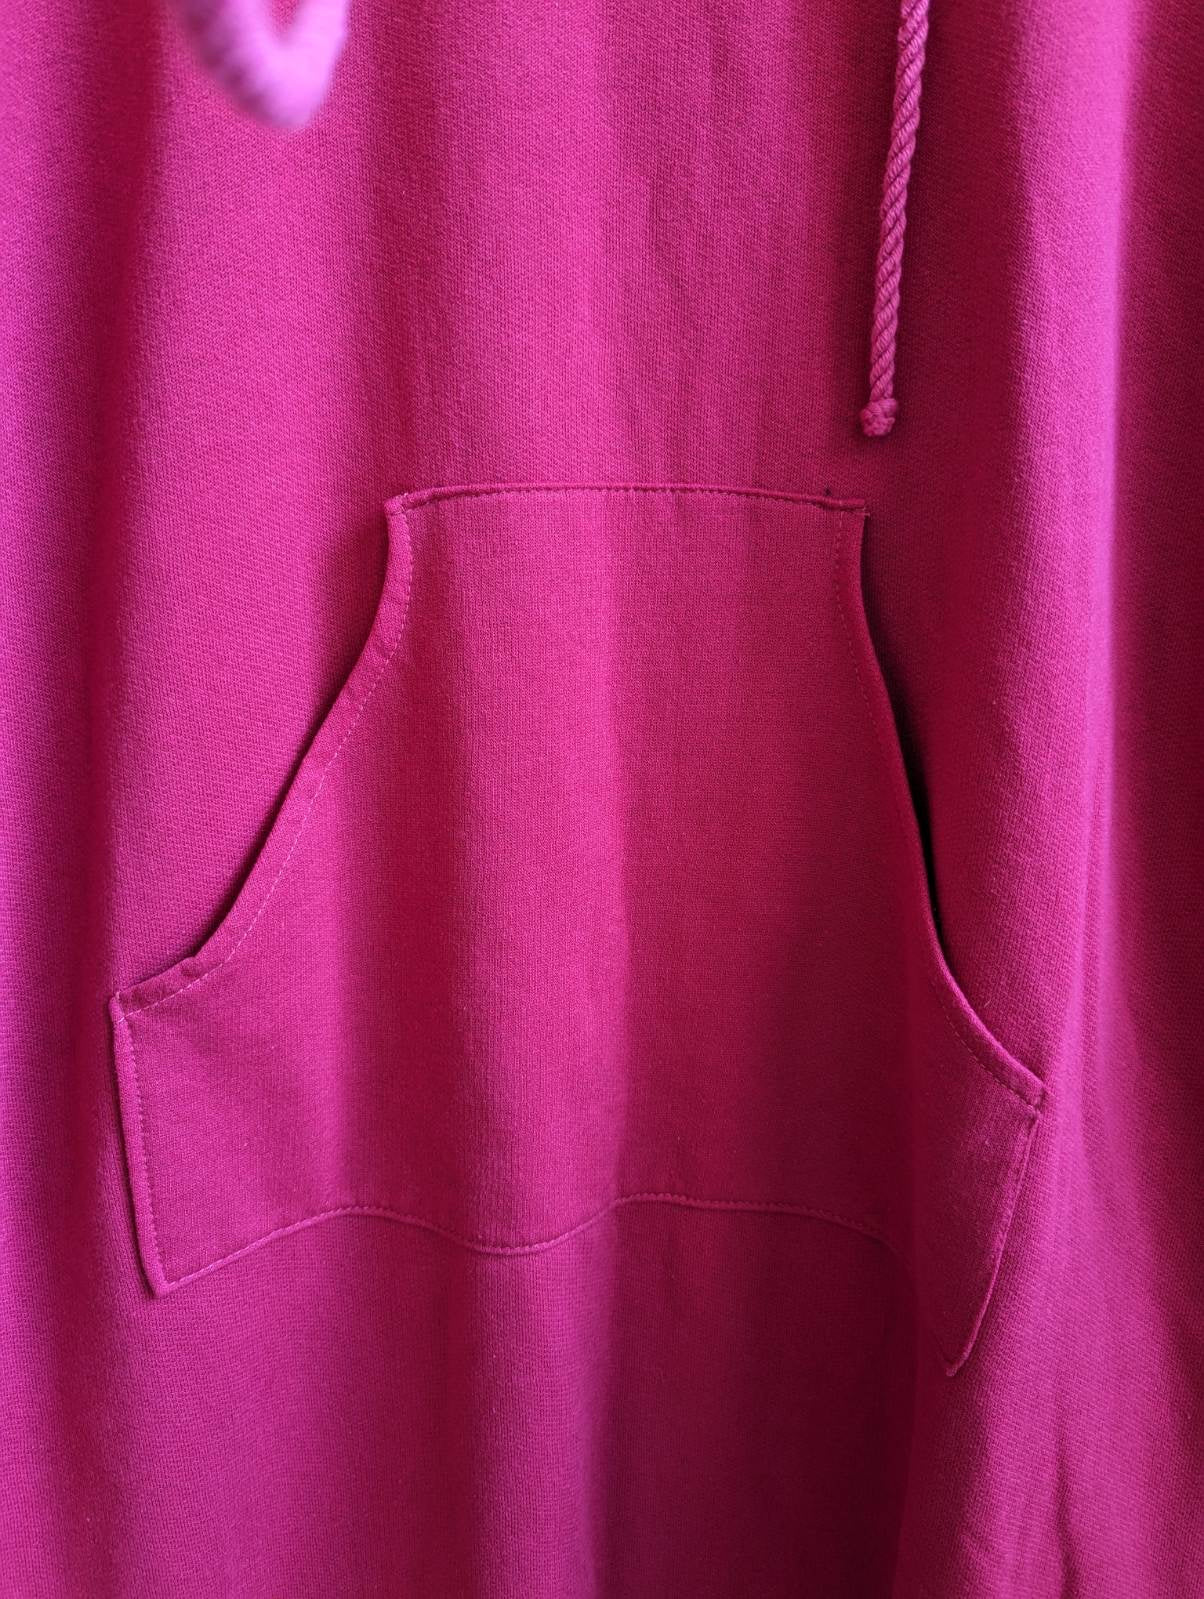 1980s Hallmark Raspberry Pink Sweatshirt Dress